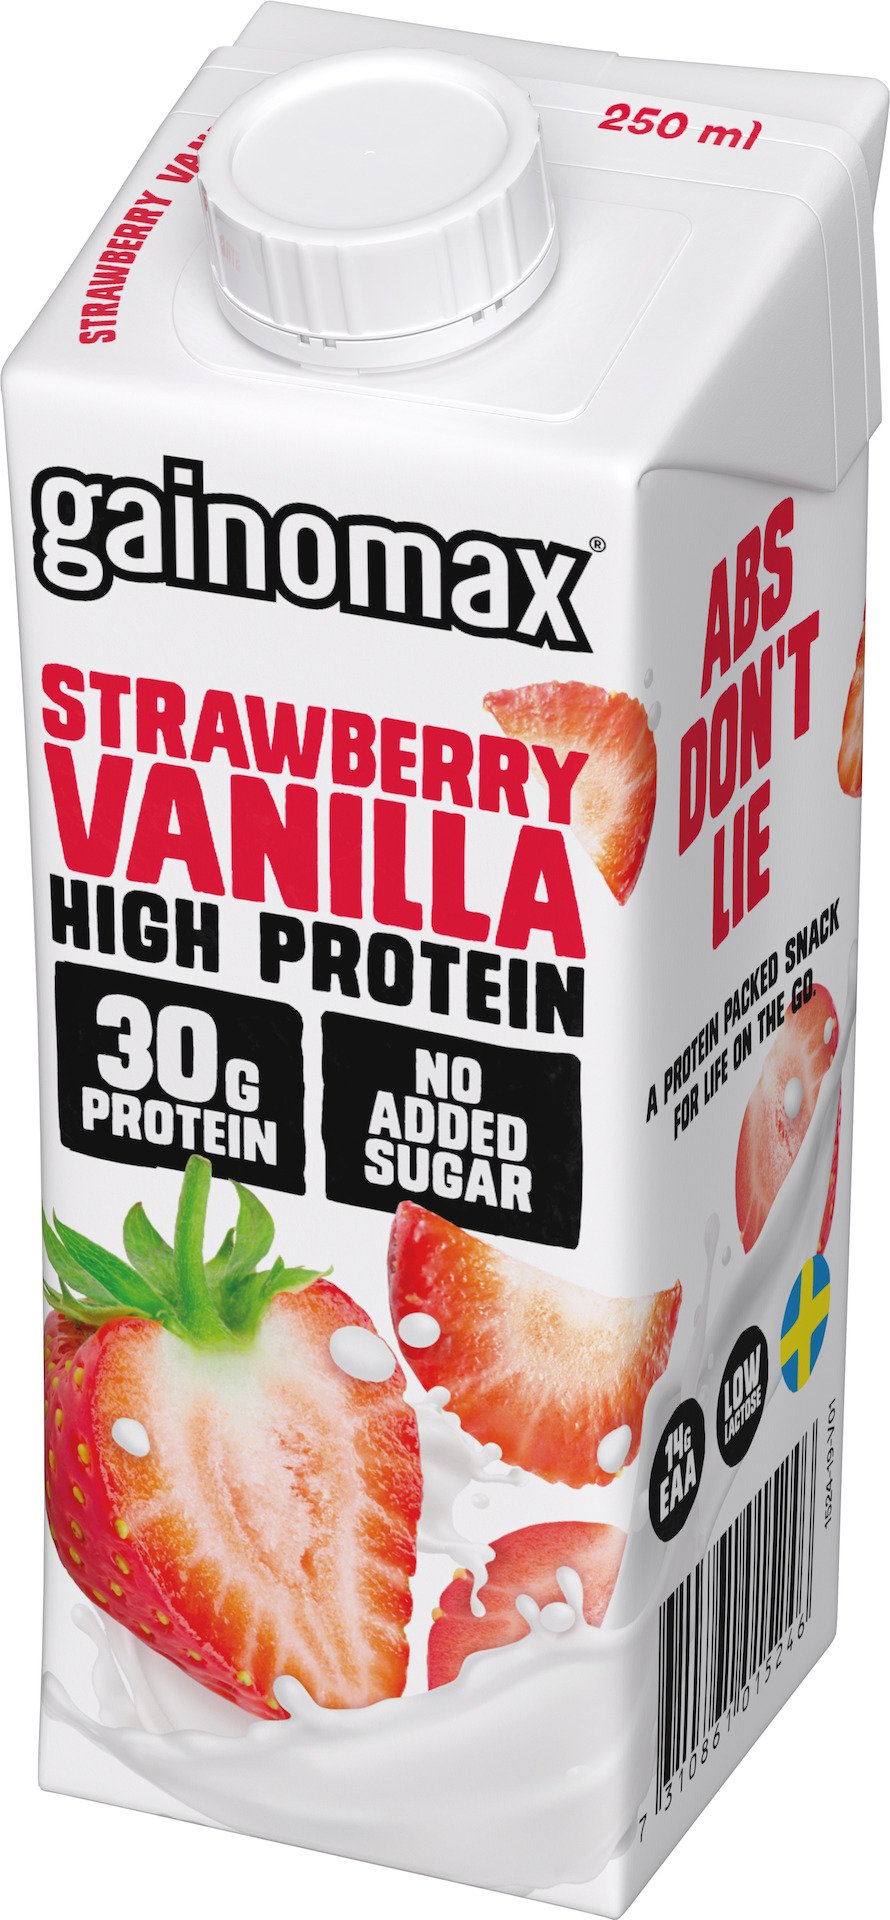 Gainomax High Protein Drink Strawberry Vanilla 250 ml